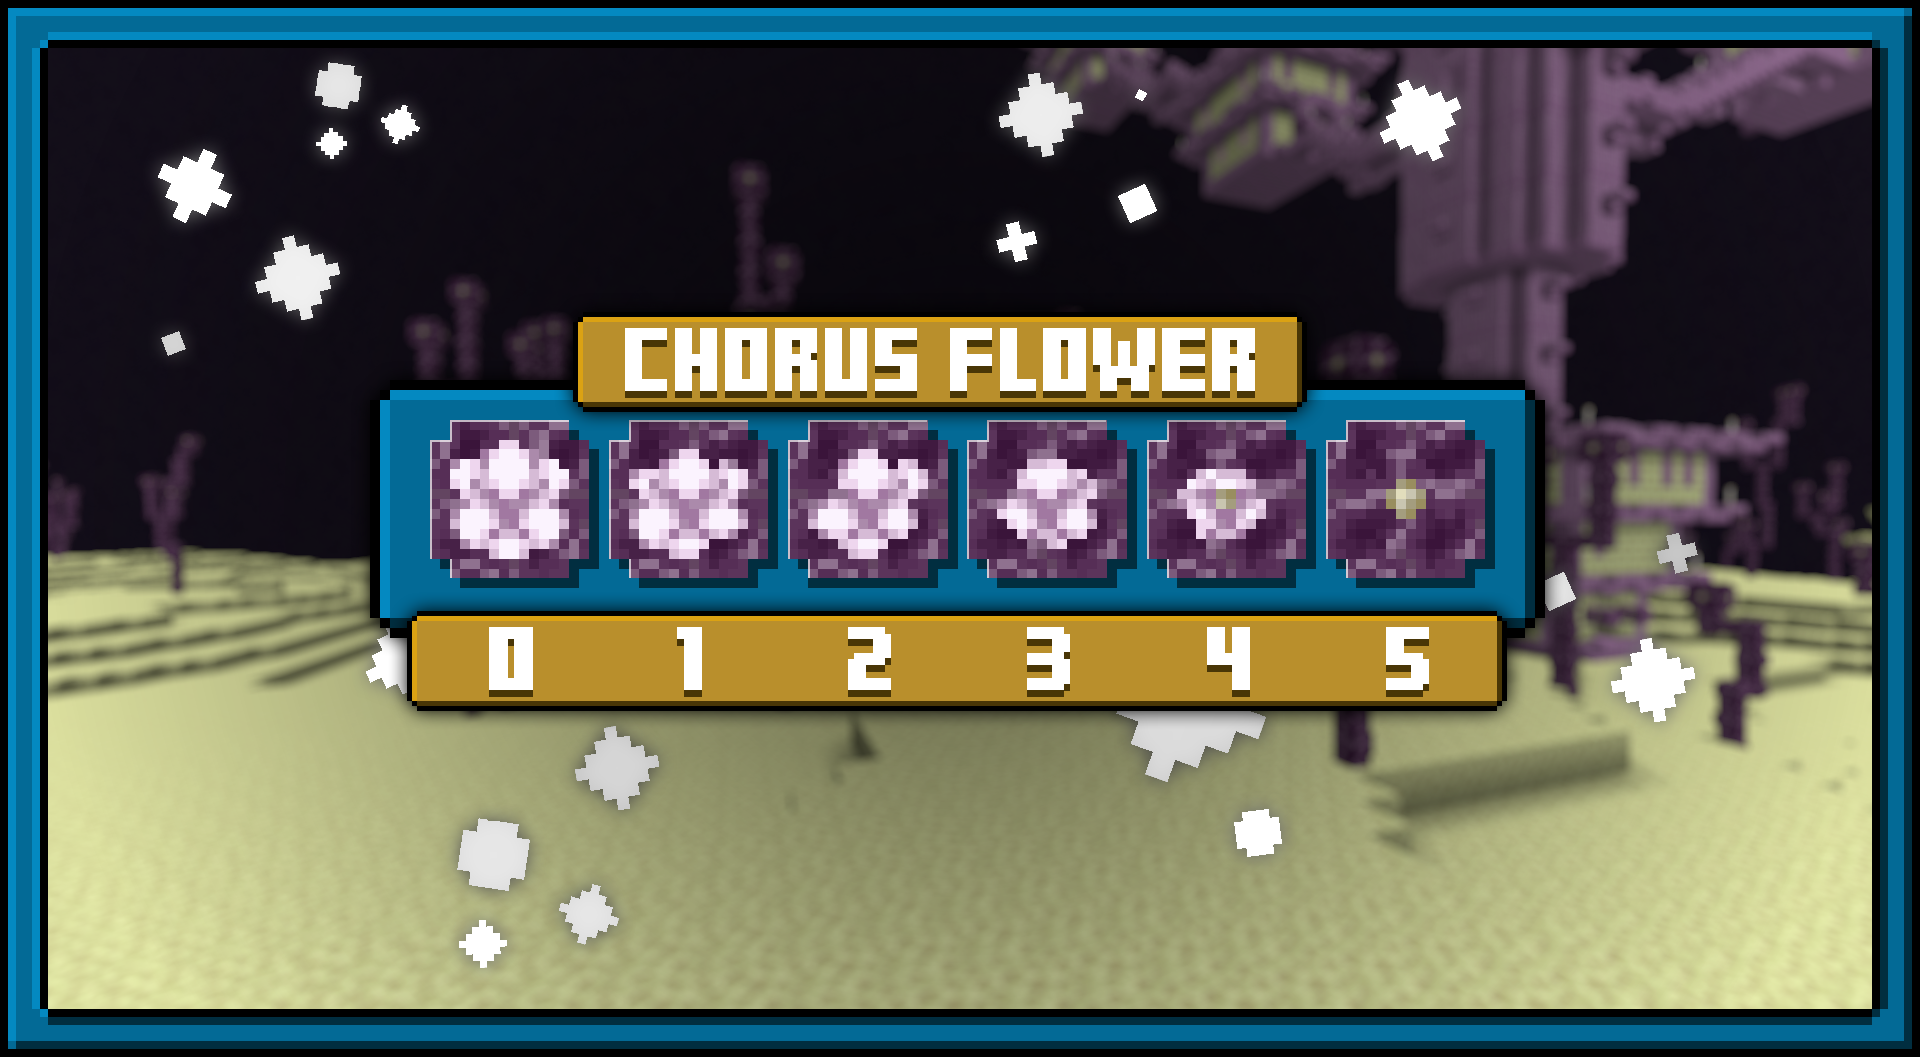 Chorus Flower